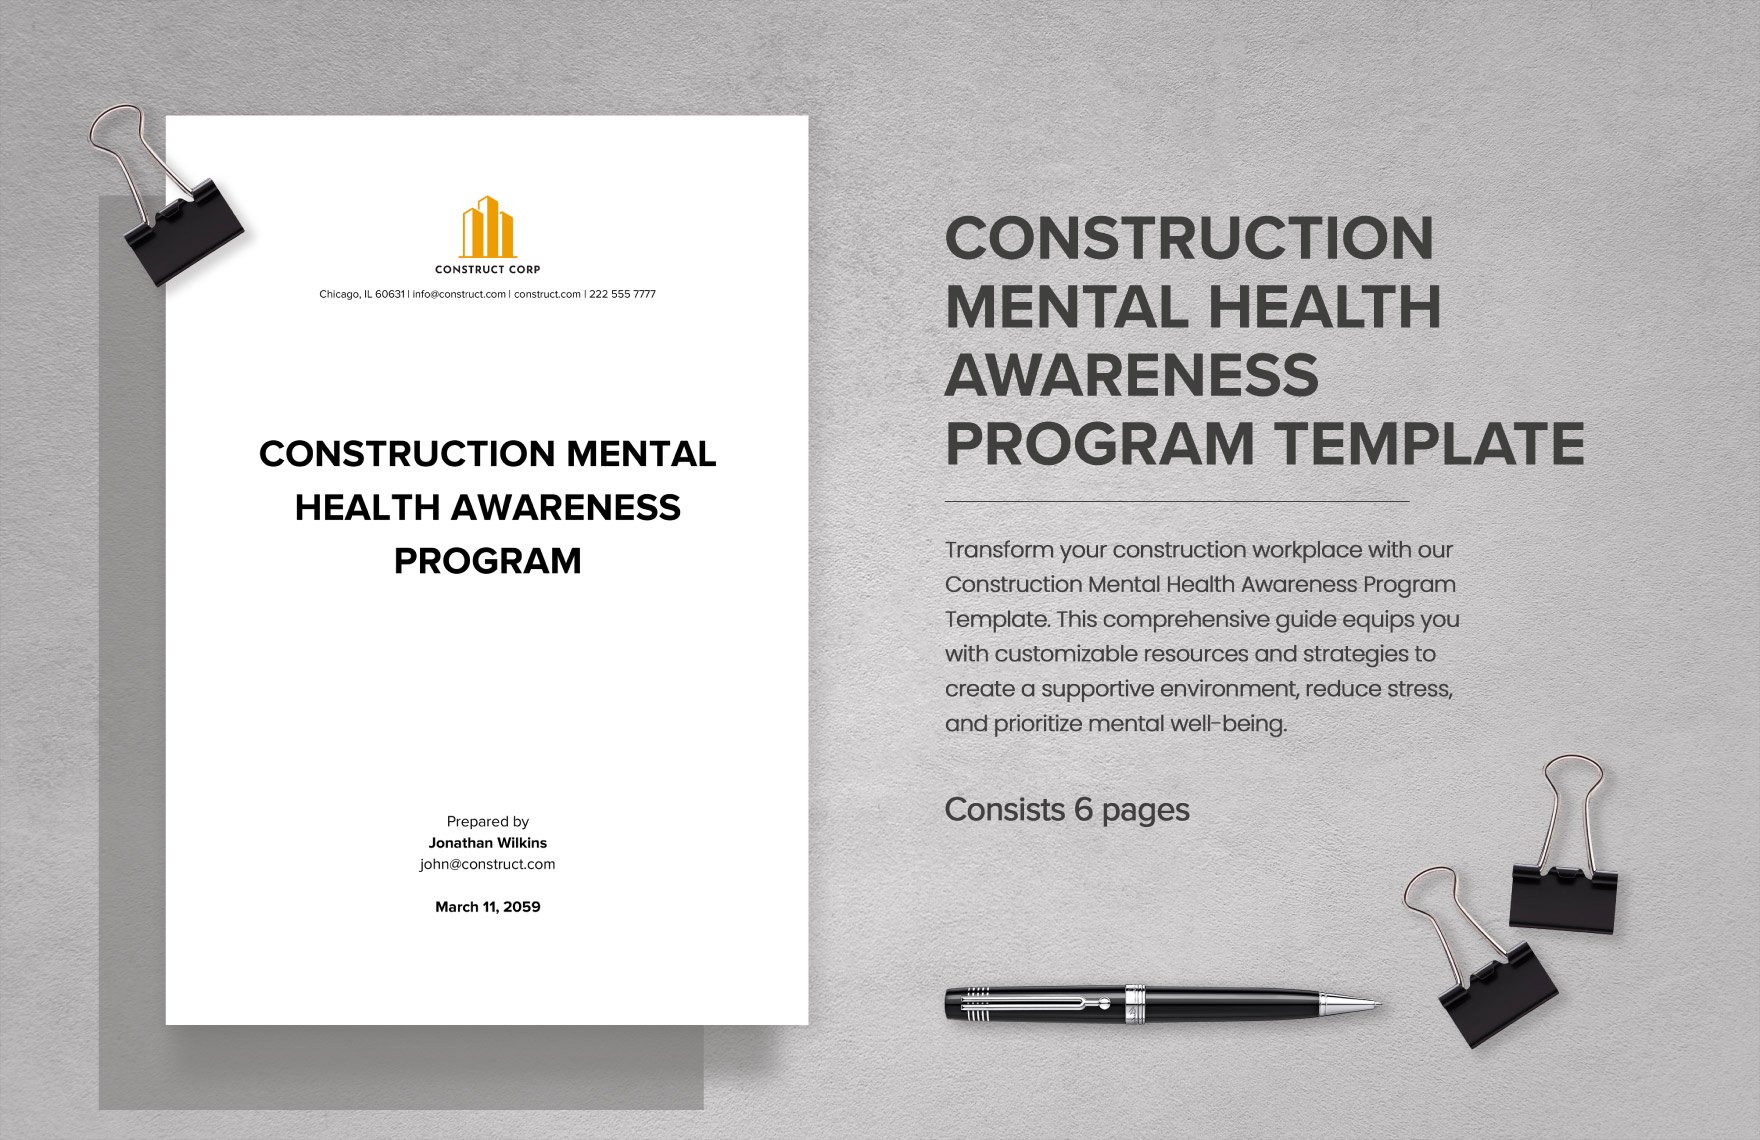 Construction Mental Health Awareness Program Template